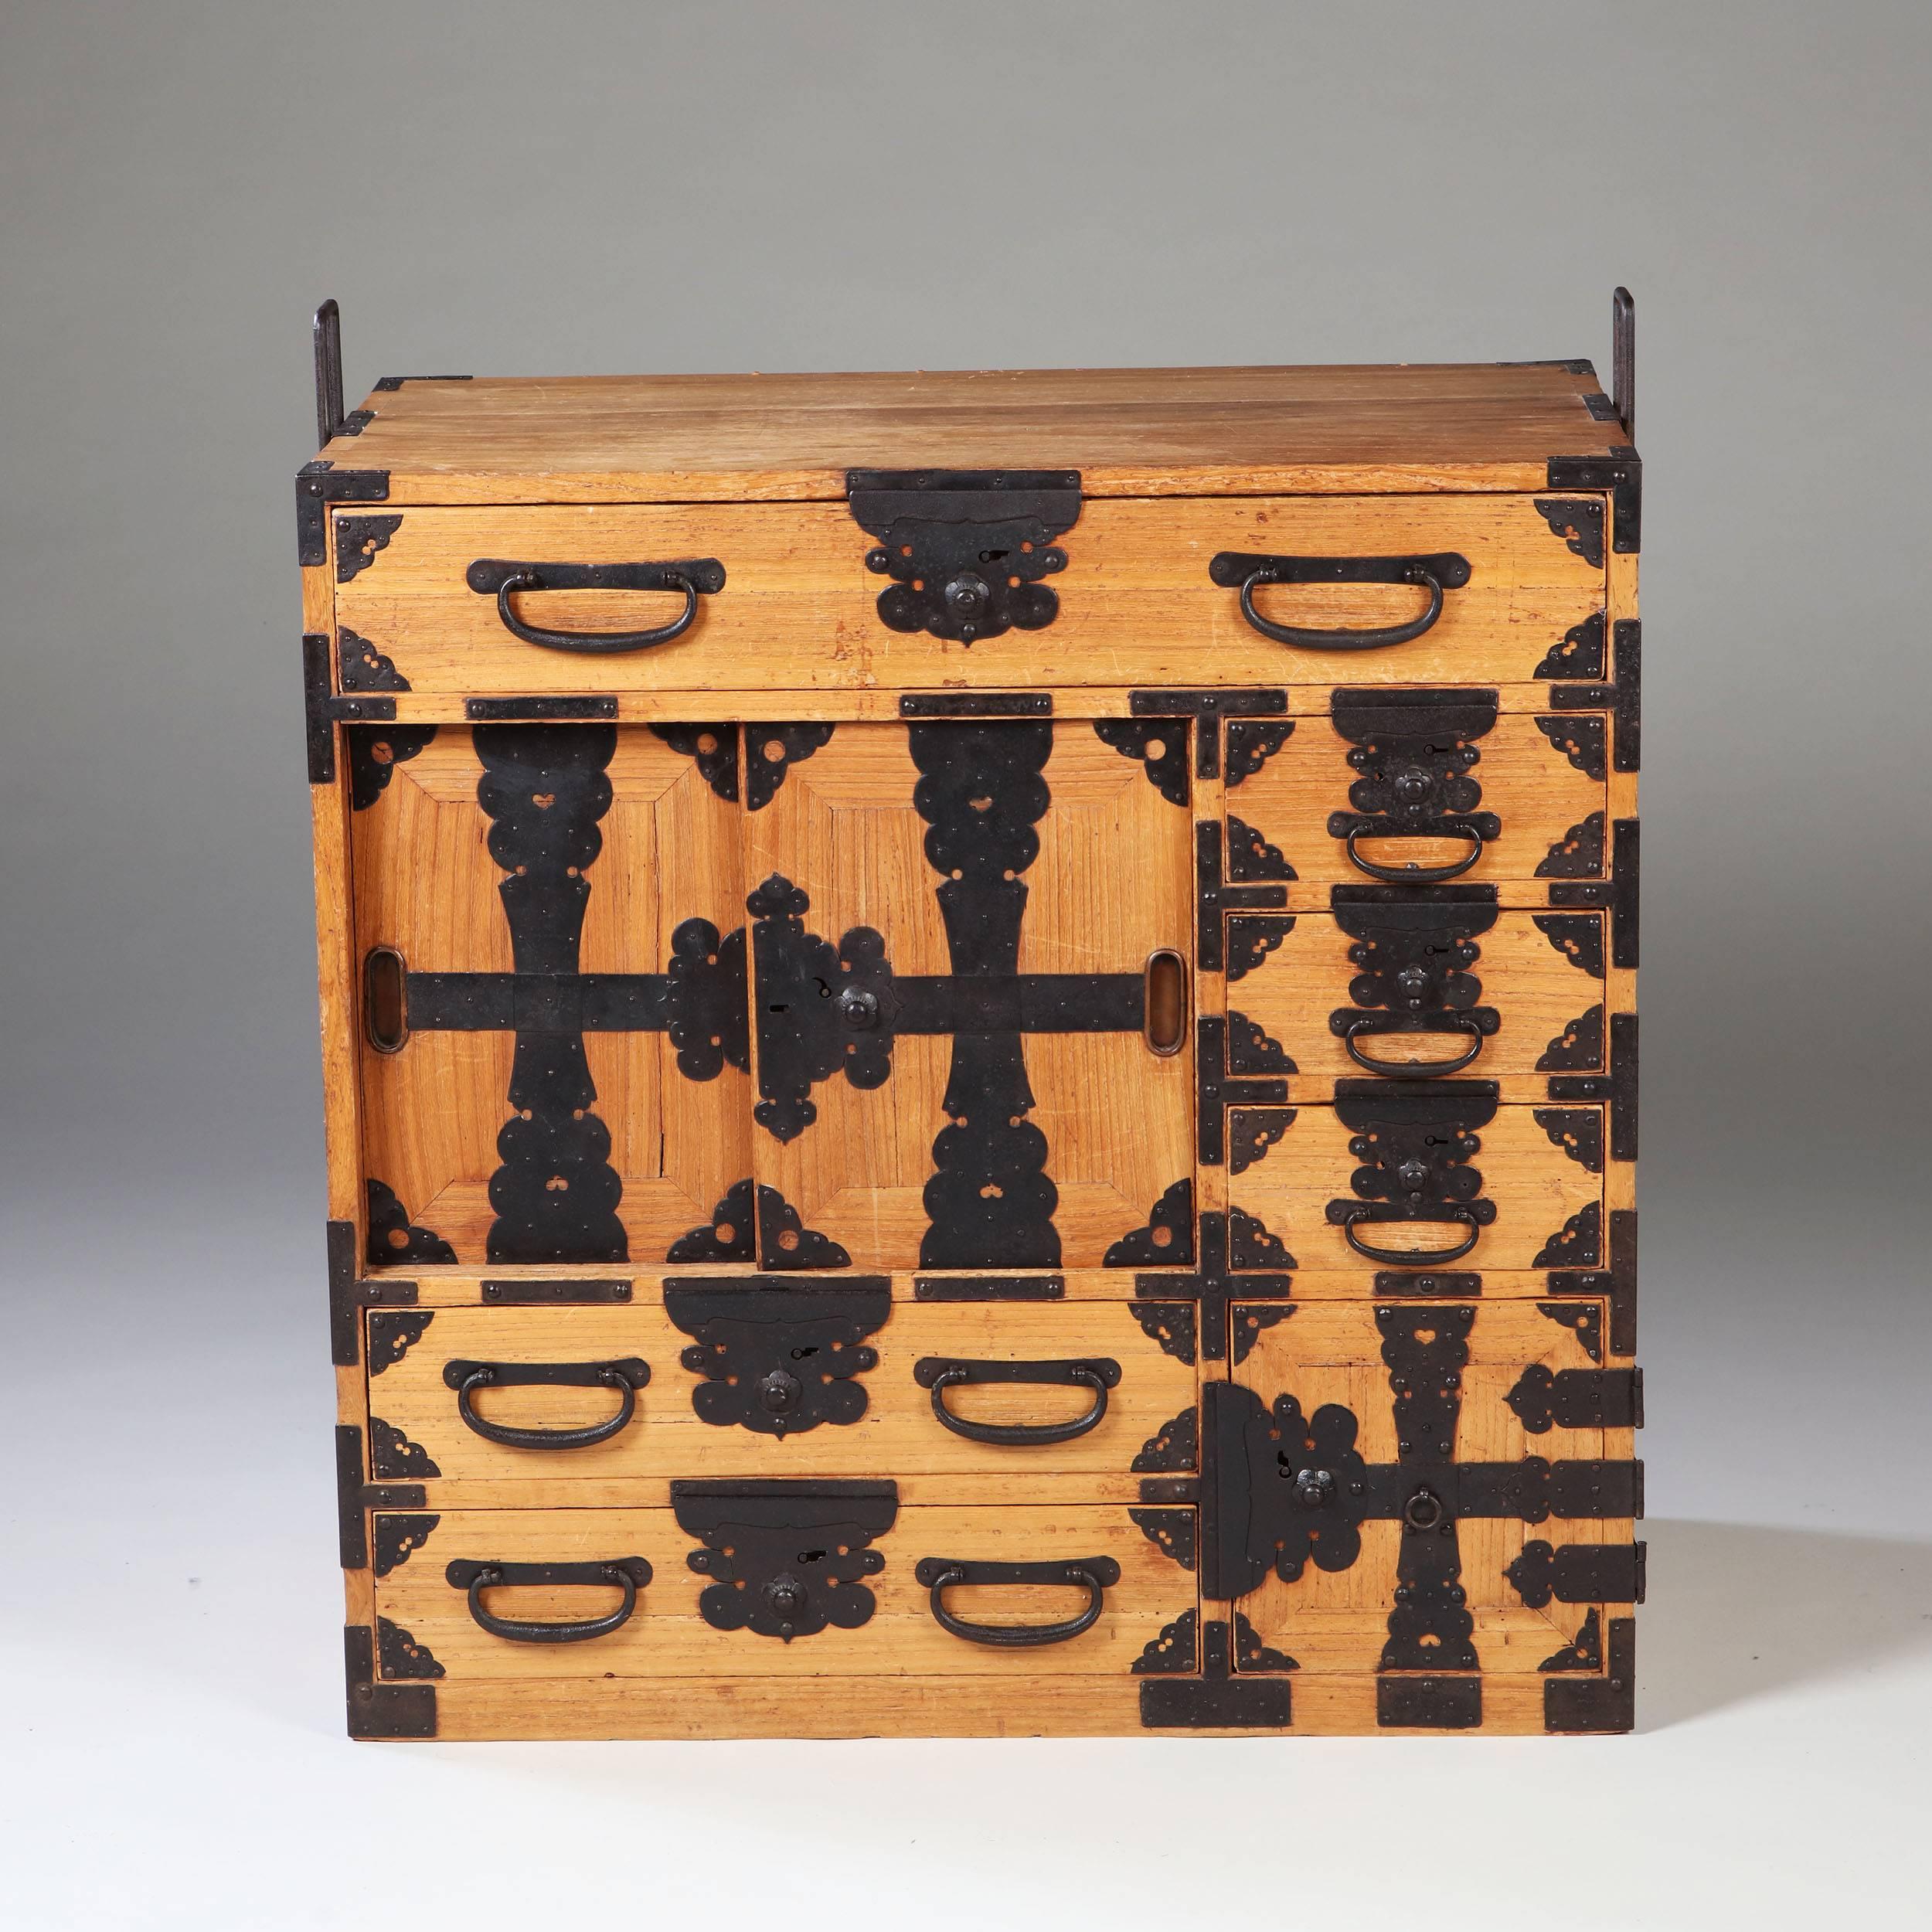 A Meiji period portable merchant's chest or 